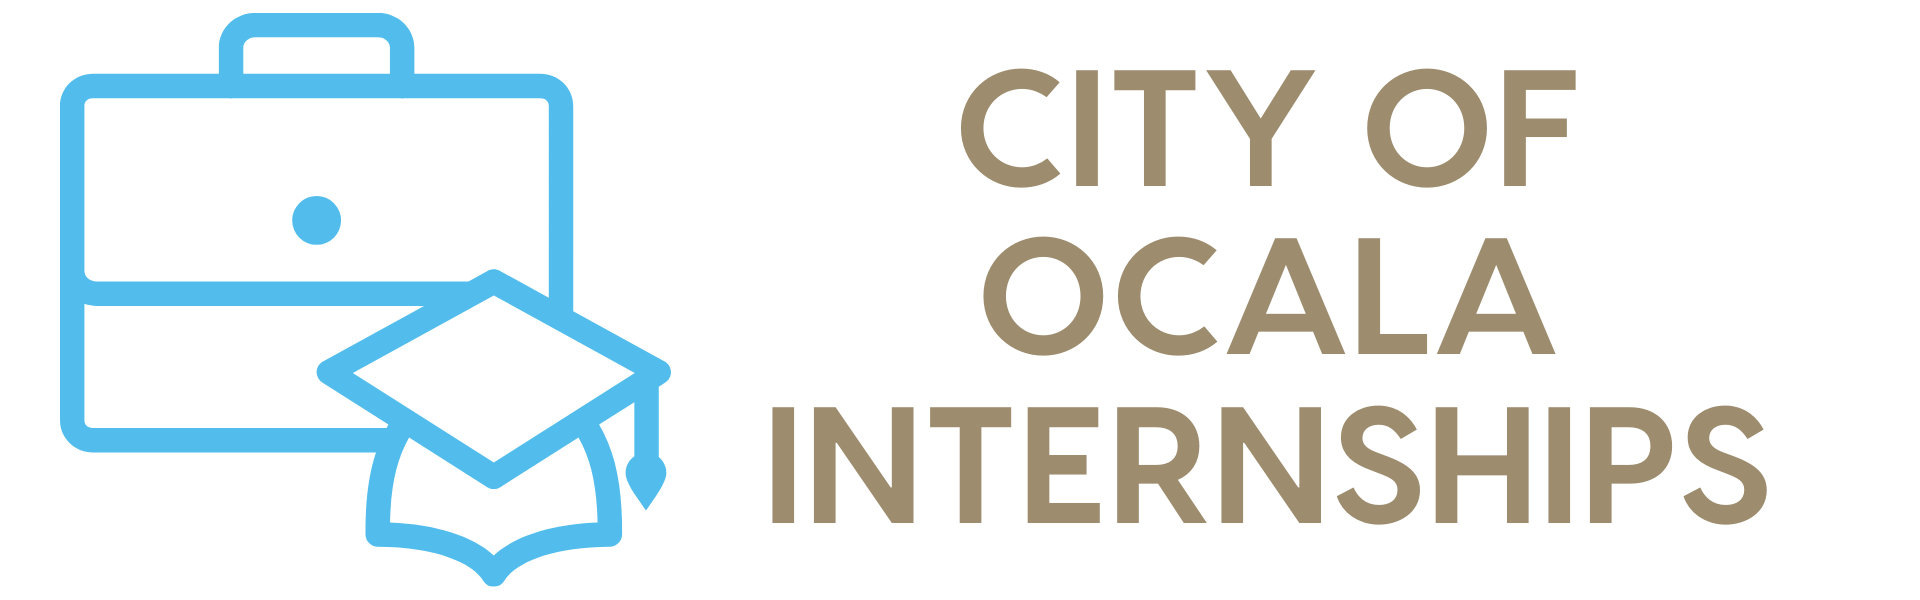 City of Ocala Internships Banner